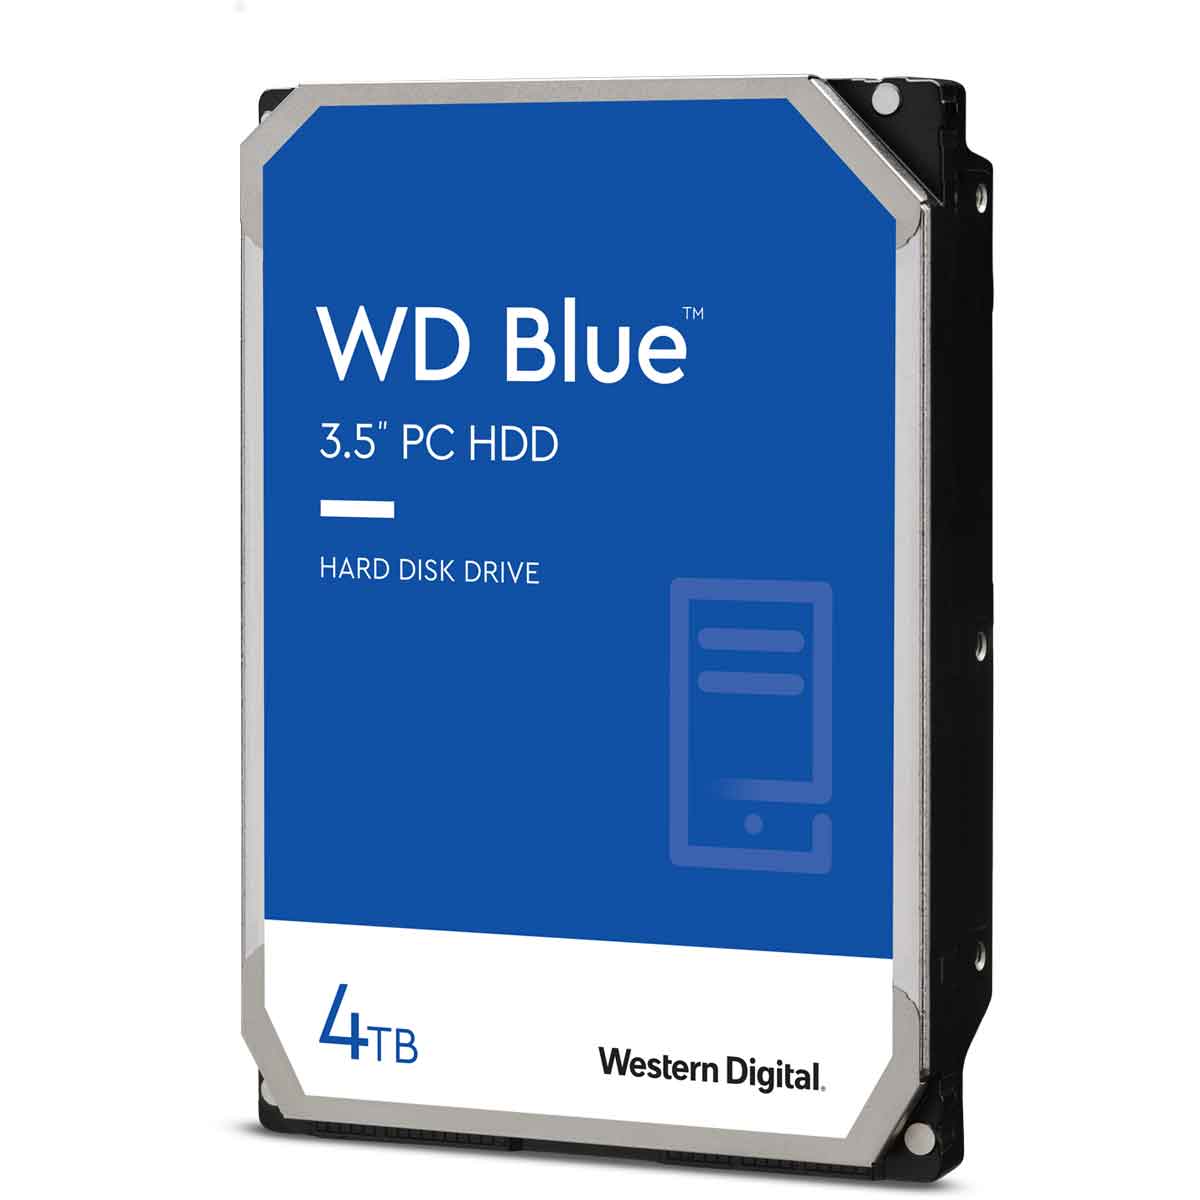 Western Digital（ウエスタンデジタル） WD40EZAX 3.5インチ内蔵ハードディスク WD Blue 4TB 簡易パッケージ[WD40EZAX] 返品種別B